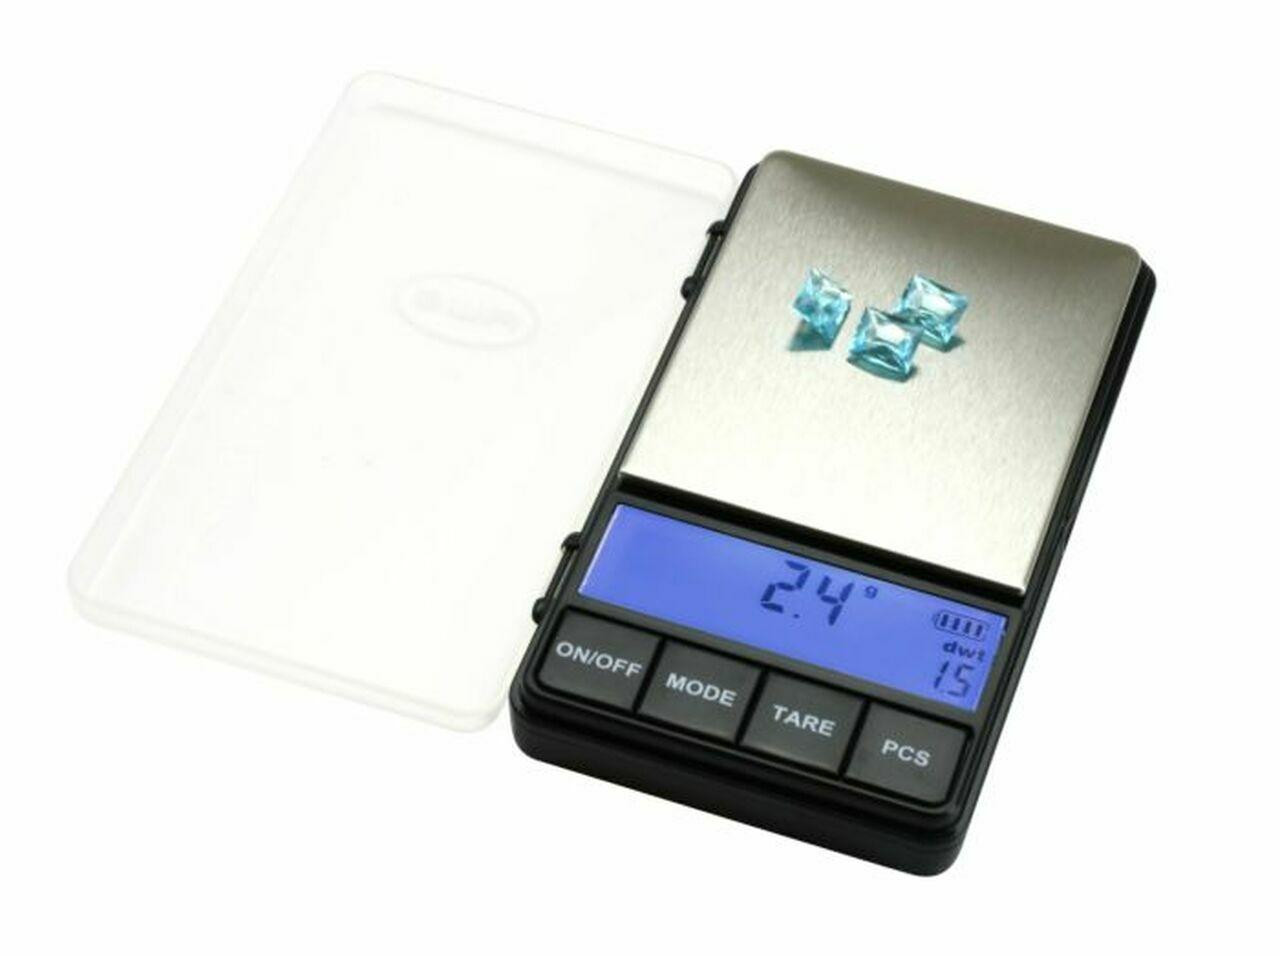 AWS AC-150-BLK Digital Pocket Scale, 100 g x 0.01 g